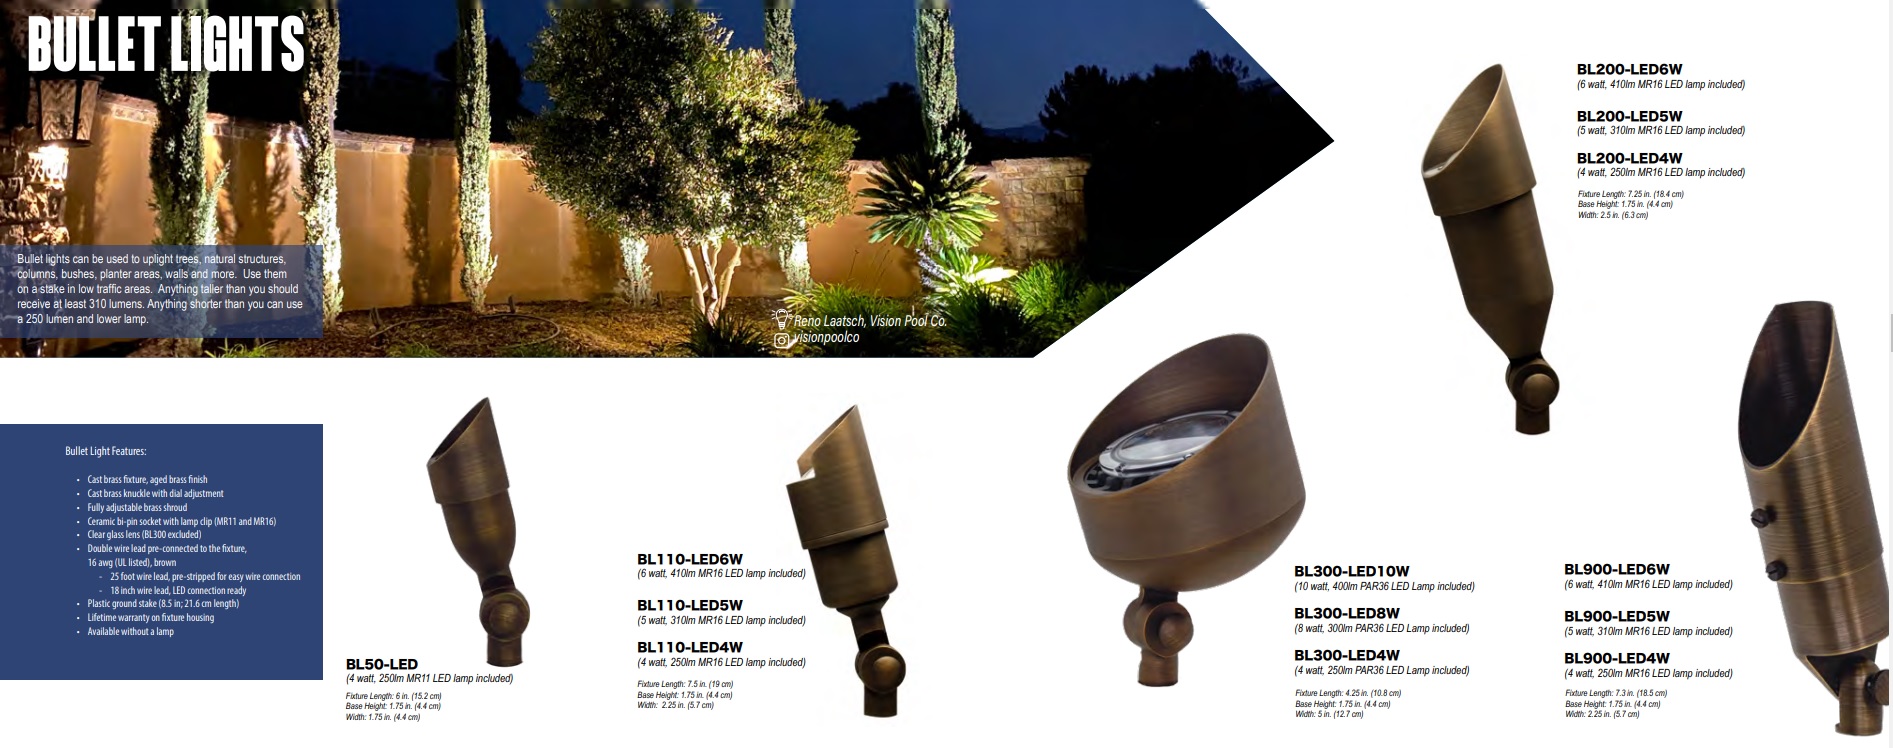 Single Contact Bayonet LED Lamps - Alliance Outdoor Lighting